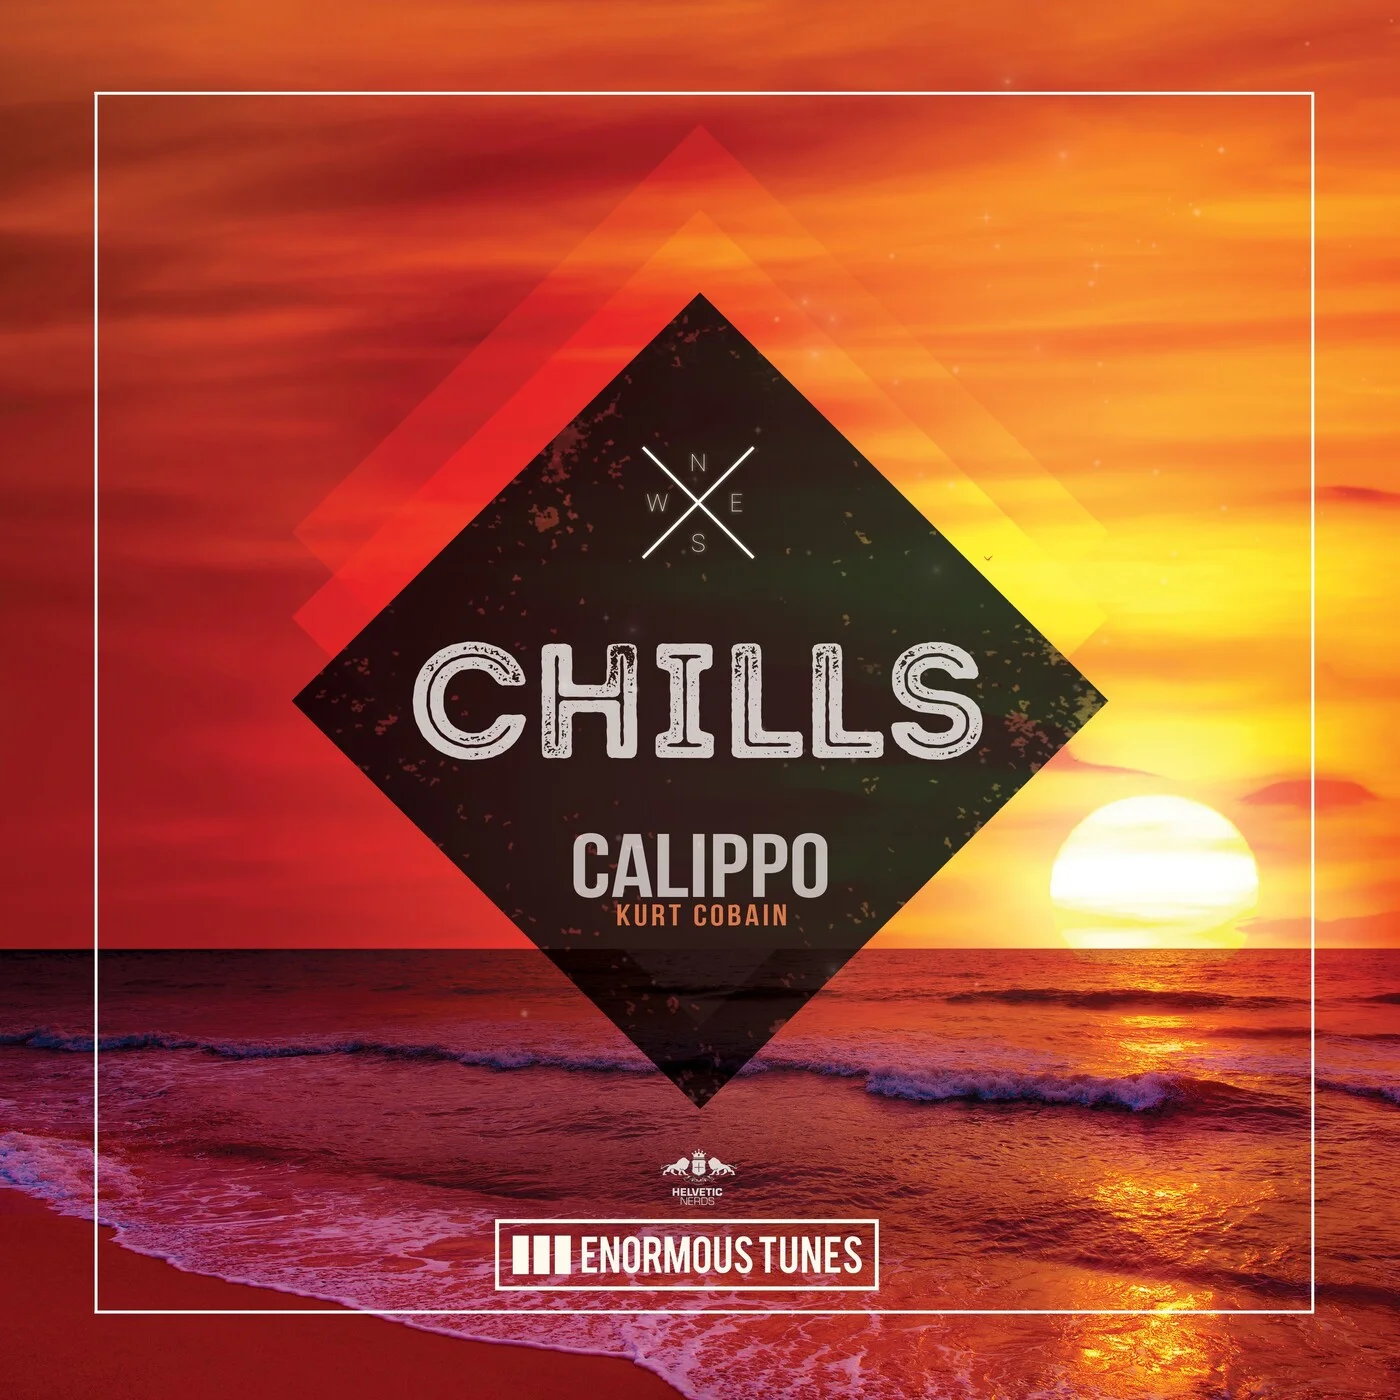 Calippo - Kurt Cobain (Extended Mix)